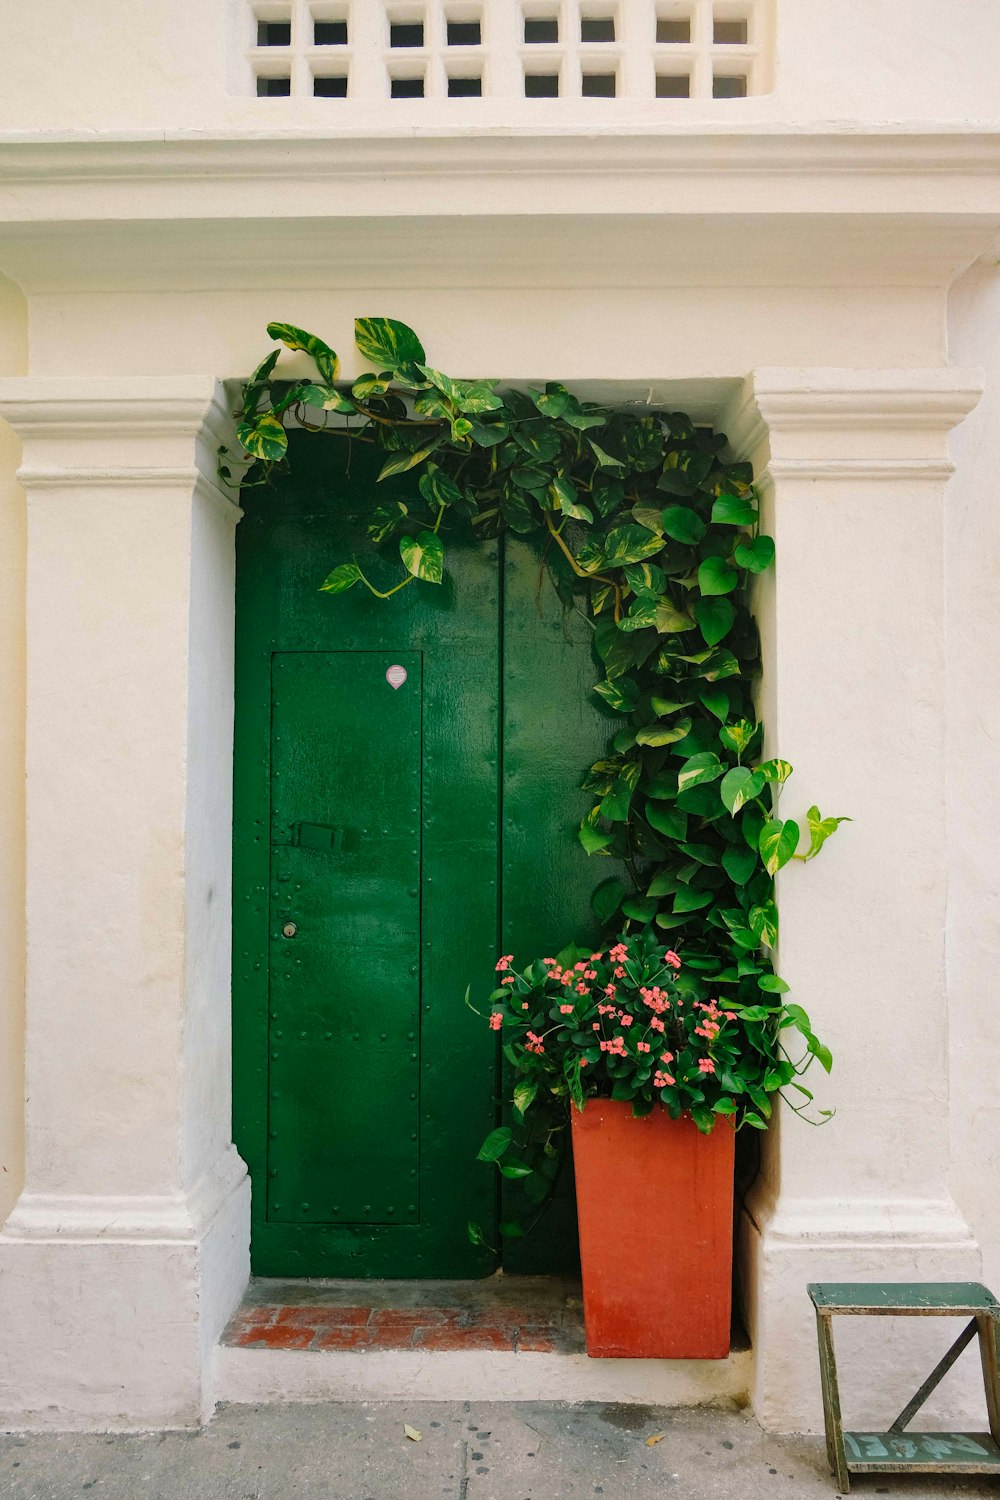 green door with green ivy plant